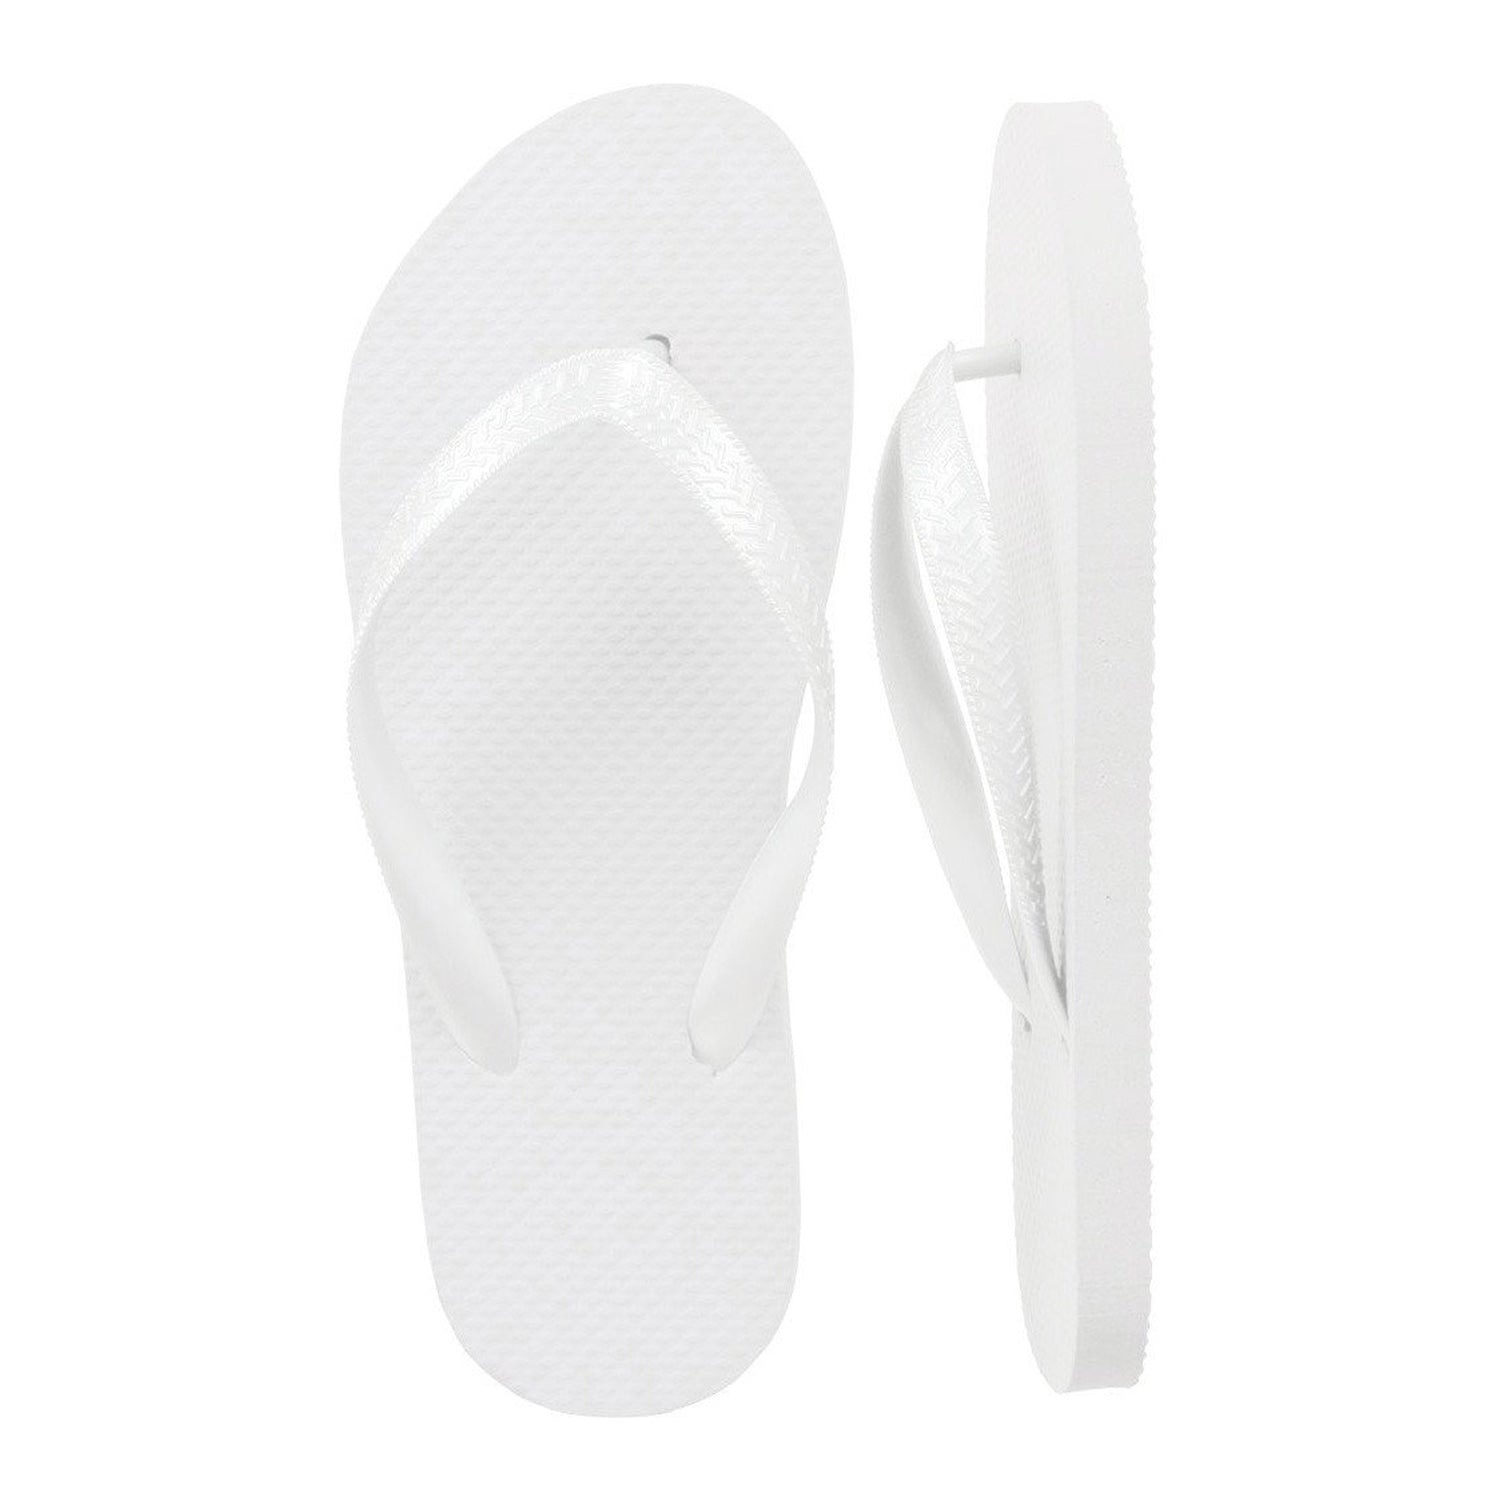 Silver & White Flip Flops in Bulk, 40 pairs